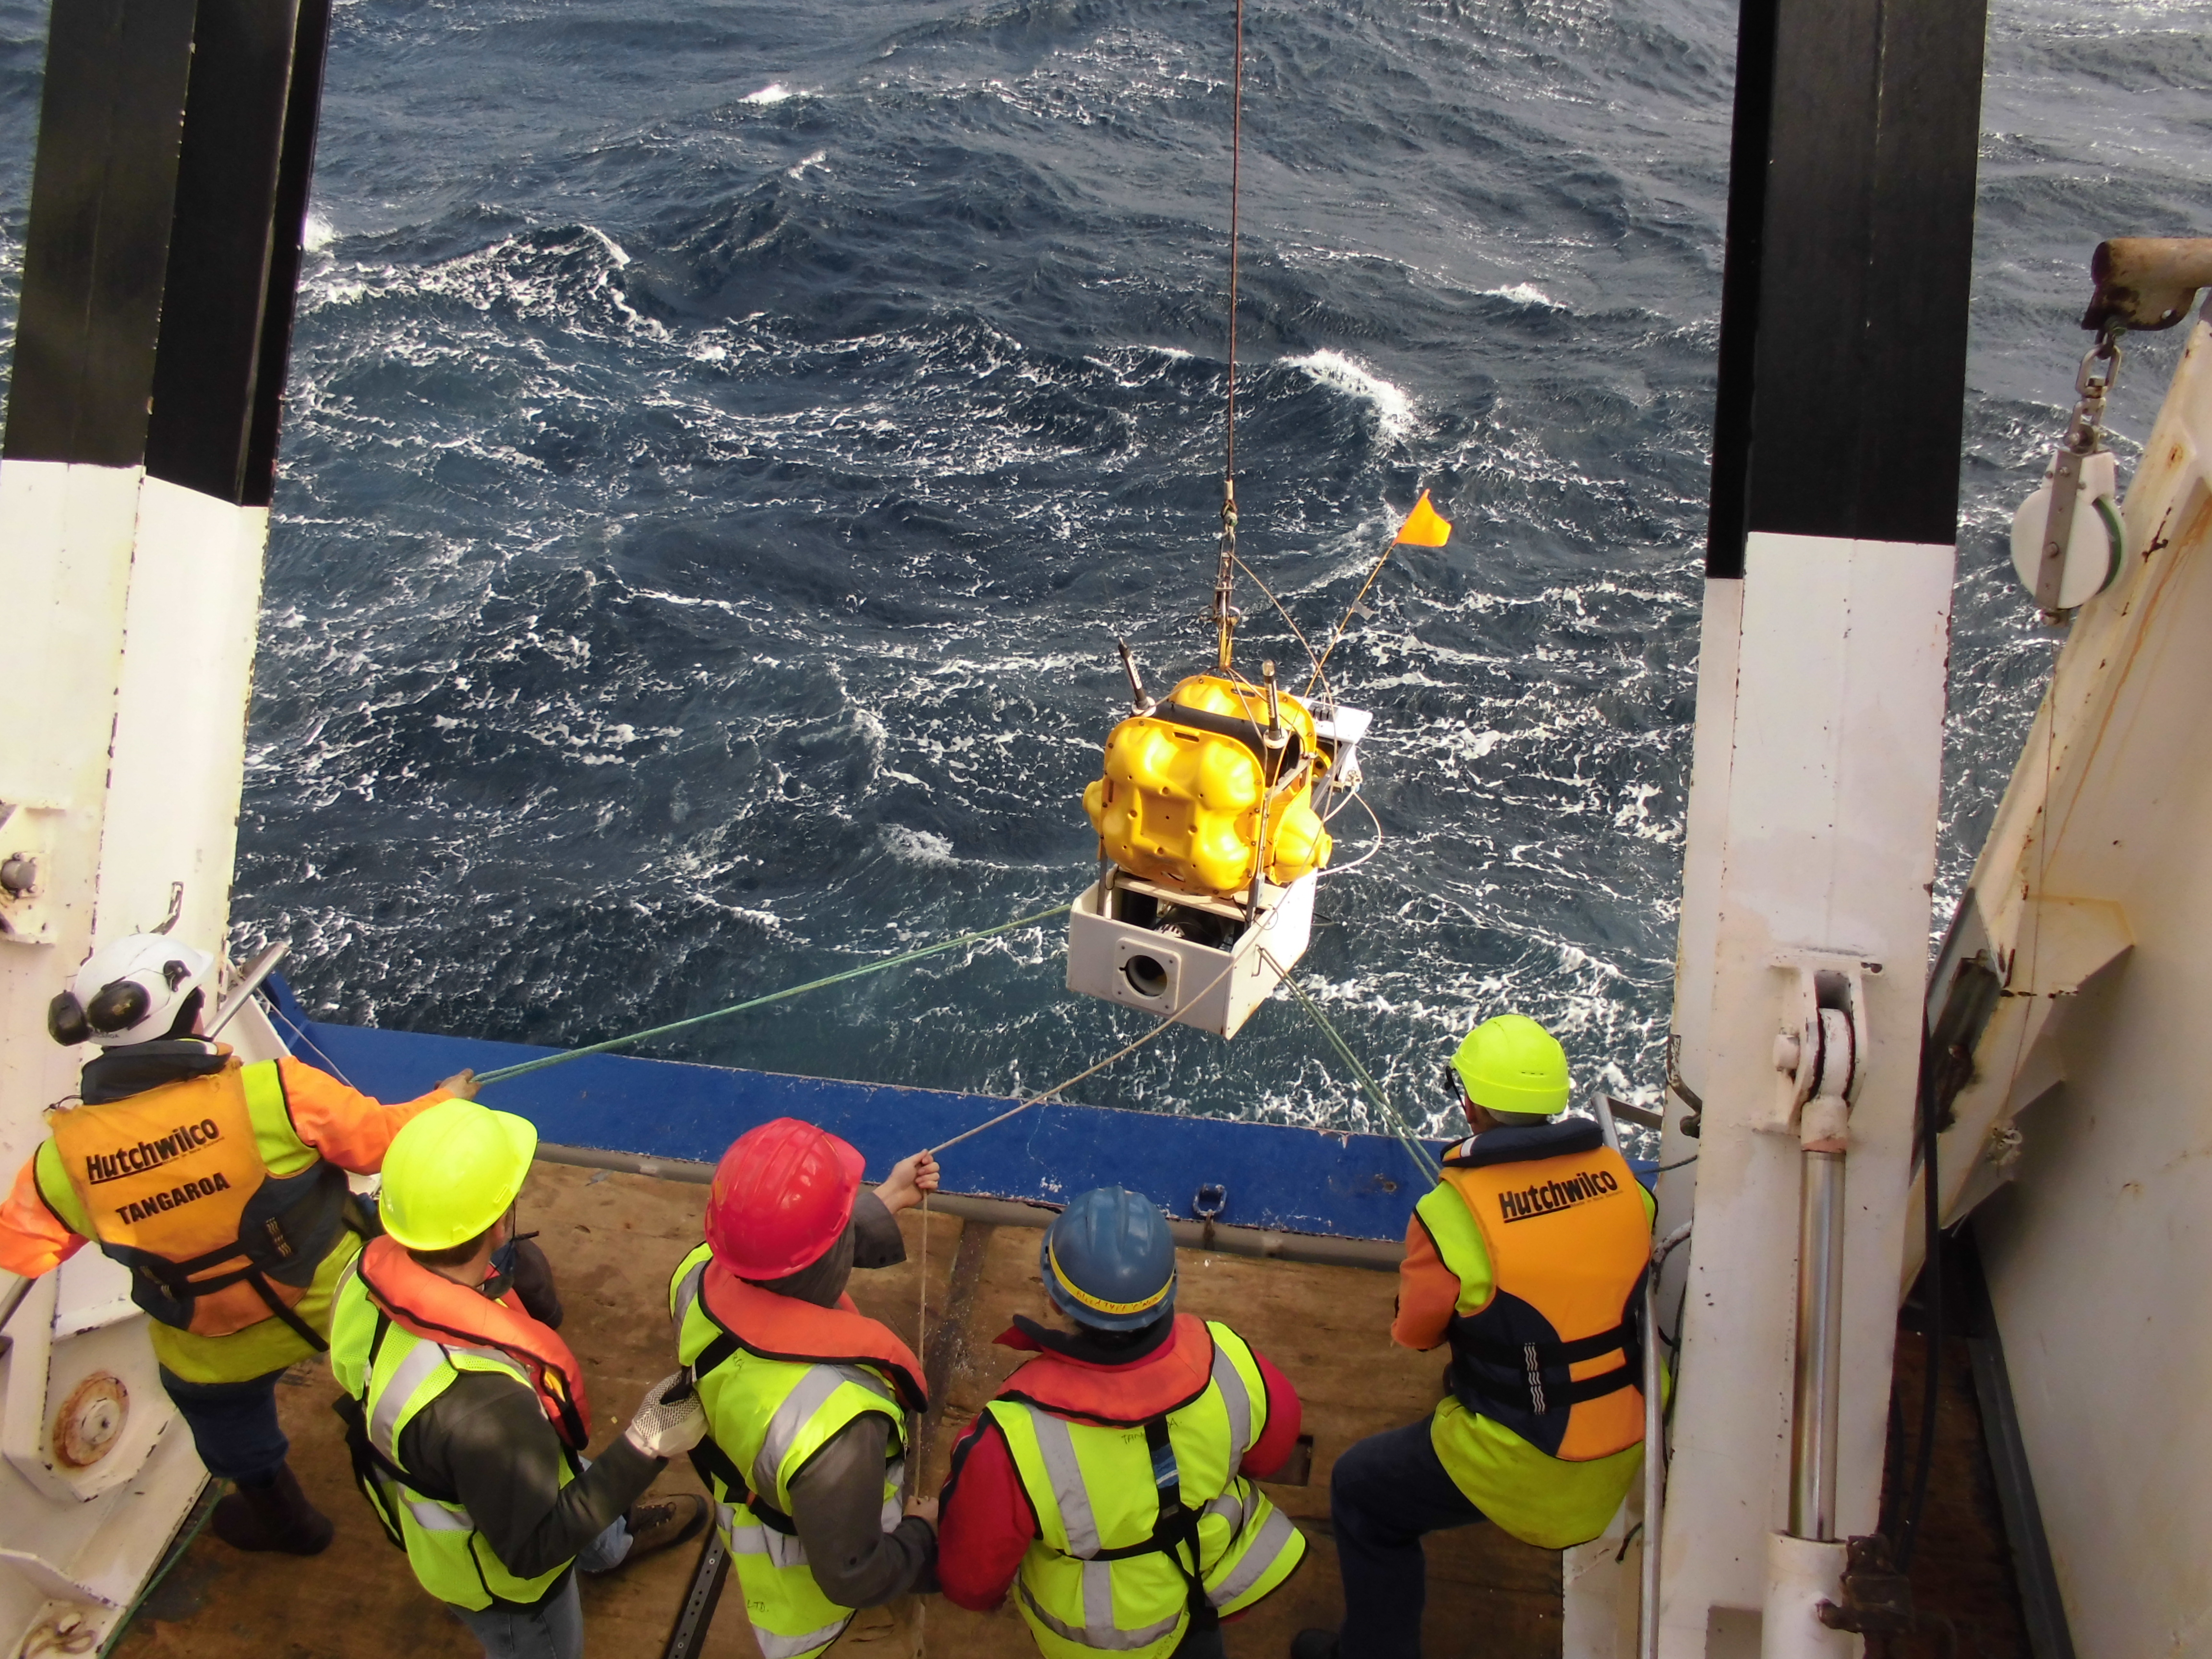 Scientists deploy an ocean bottom seismometer and absolute pressure gauge.